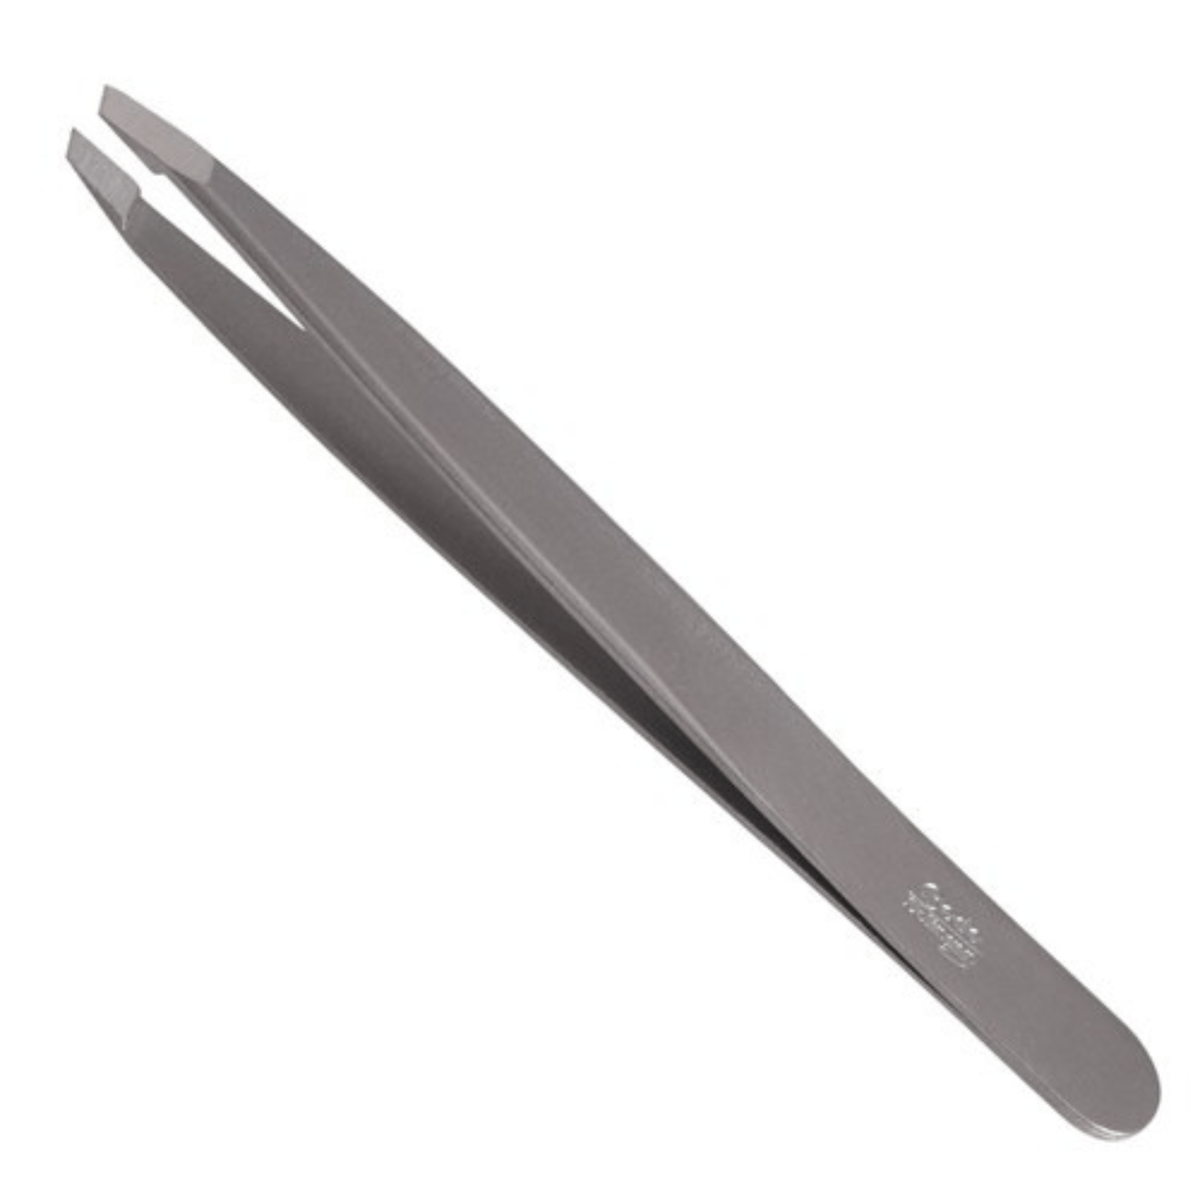 Primary Image of Stainless Steel Slanted Tweezers 9cm